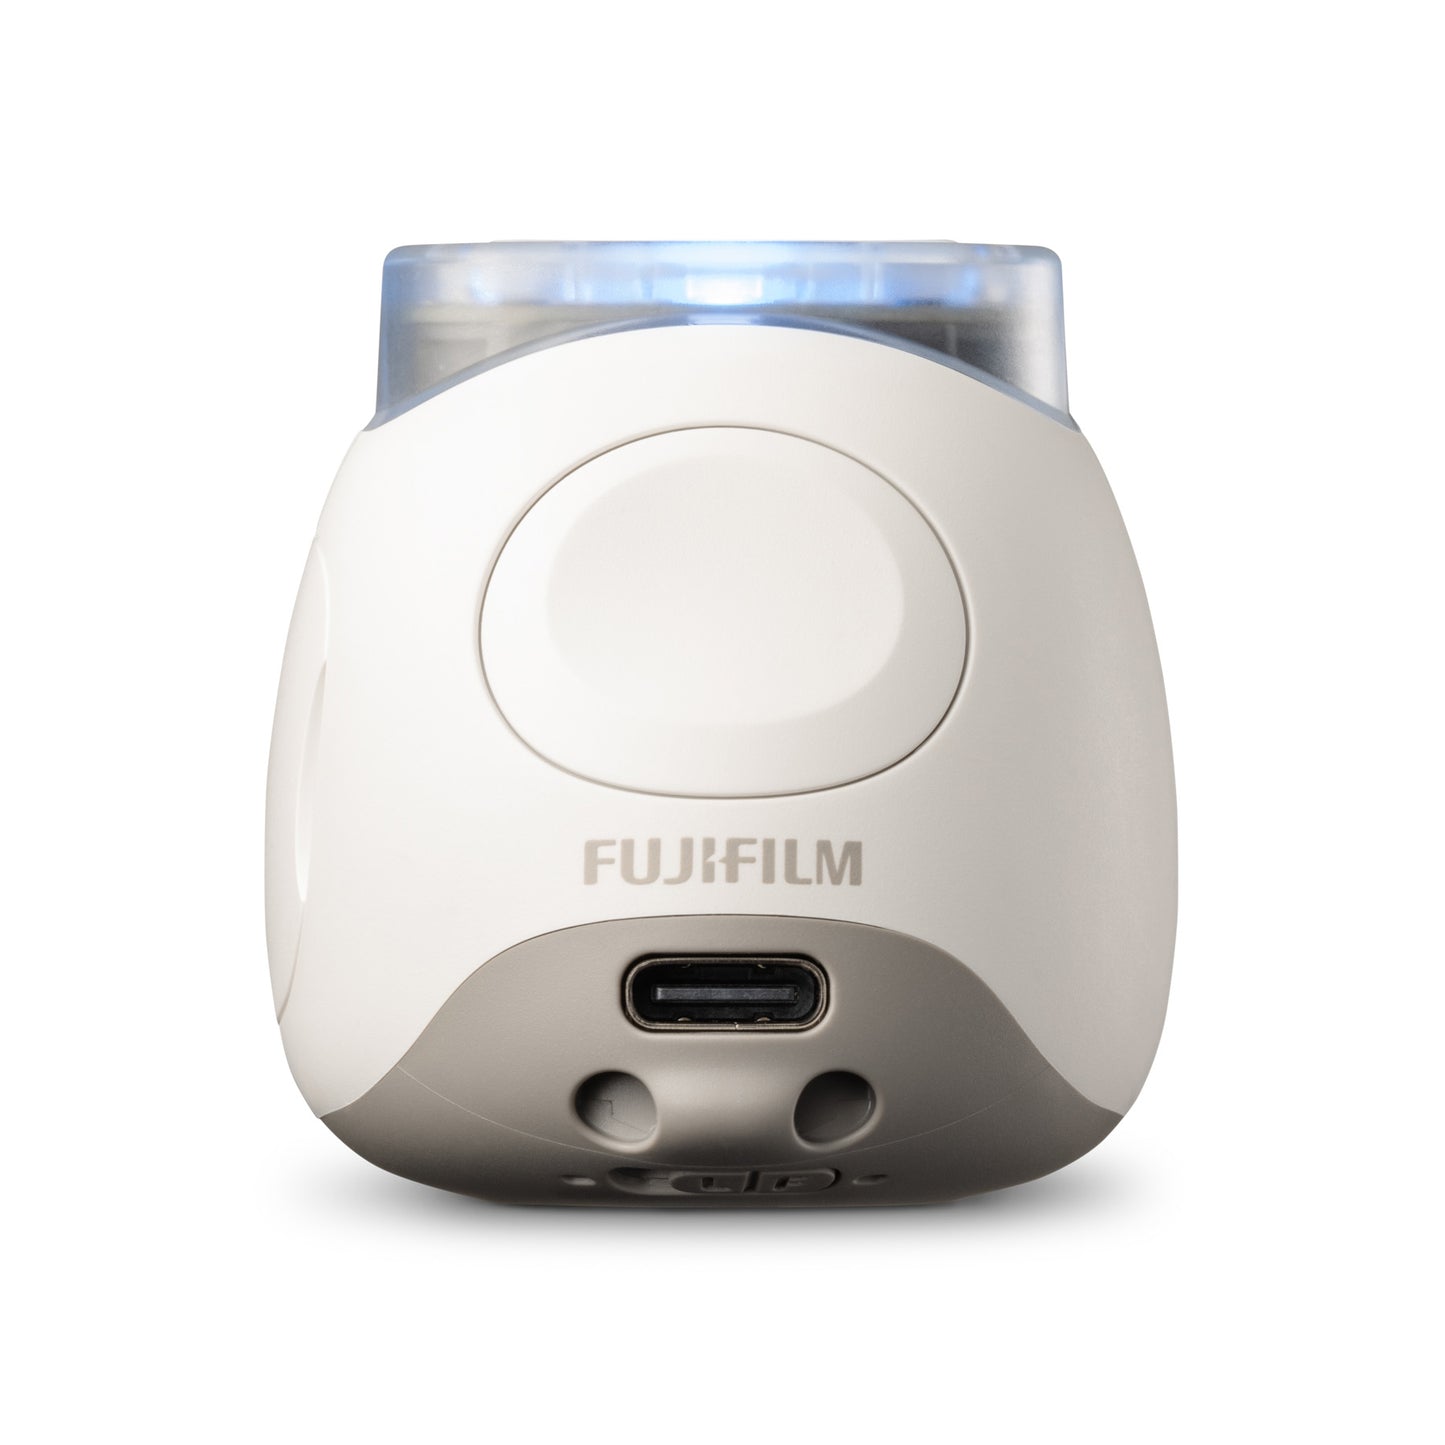 Fujifilm Instax PAL Digital Camera with Square Link Printer Bundle - White - maplin.co.uk